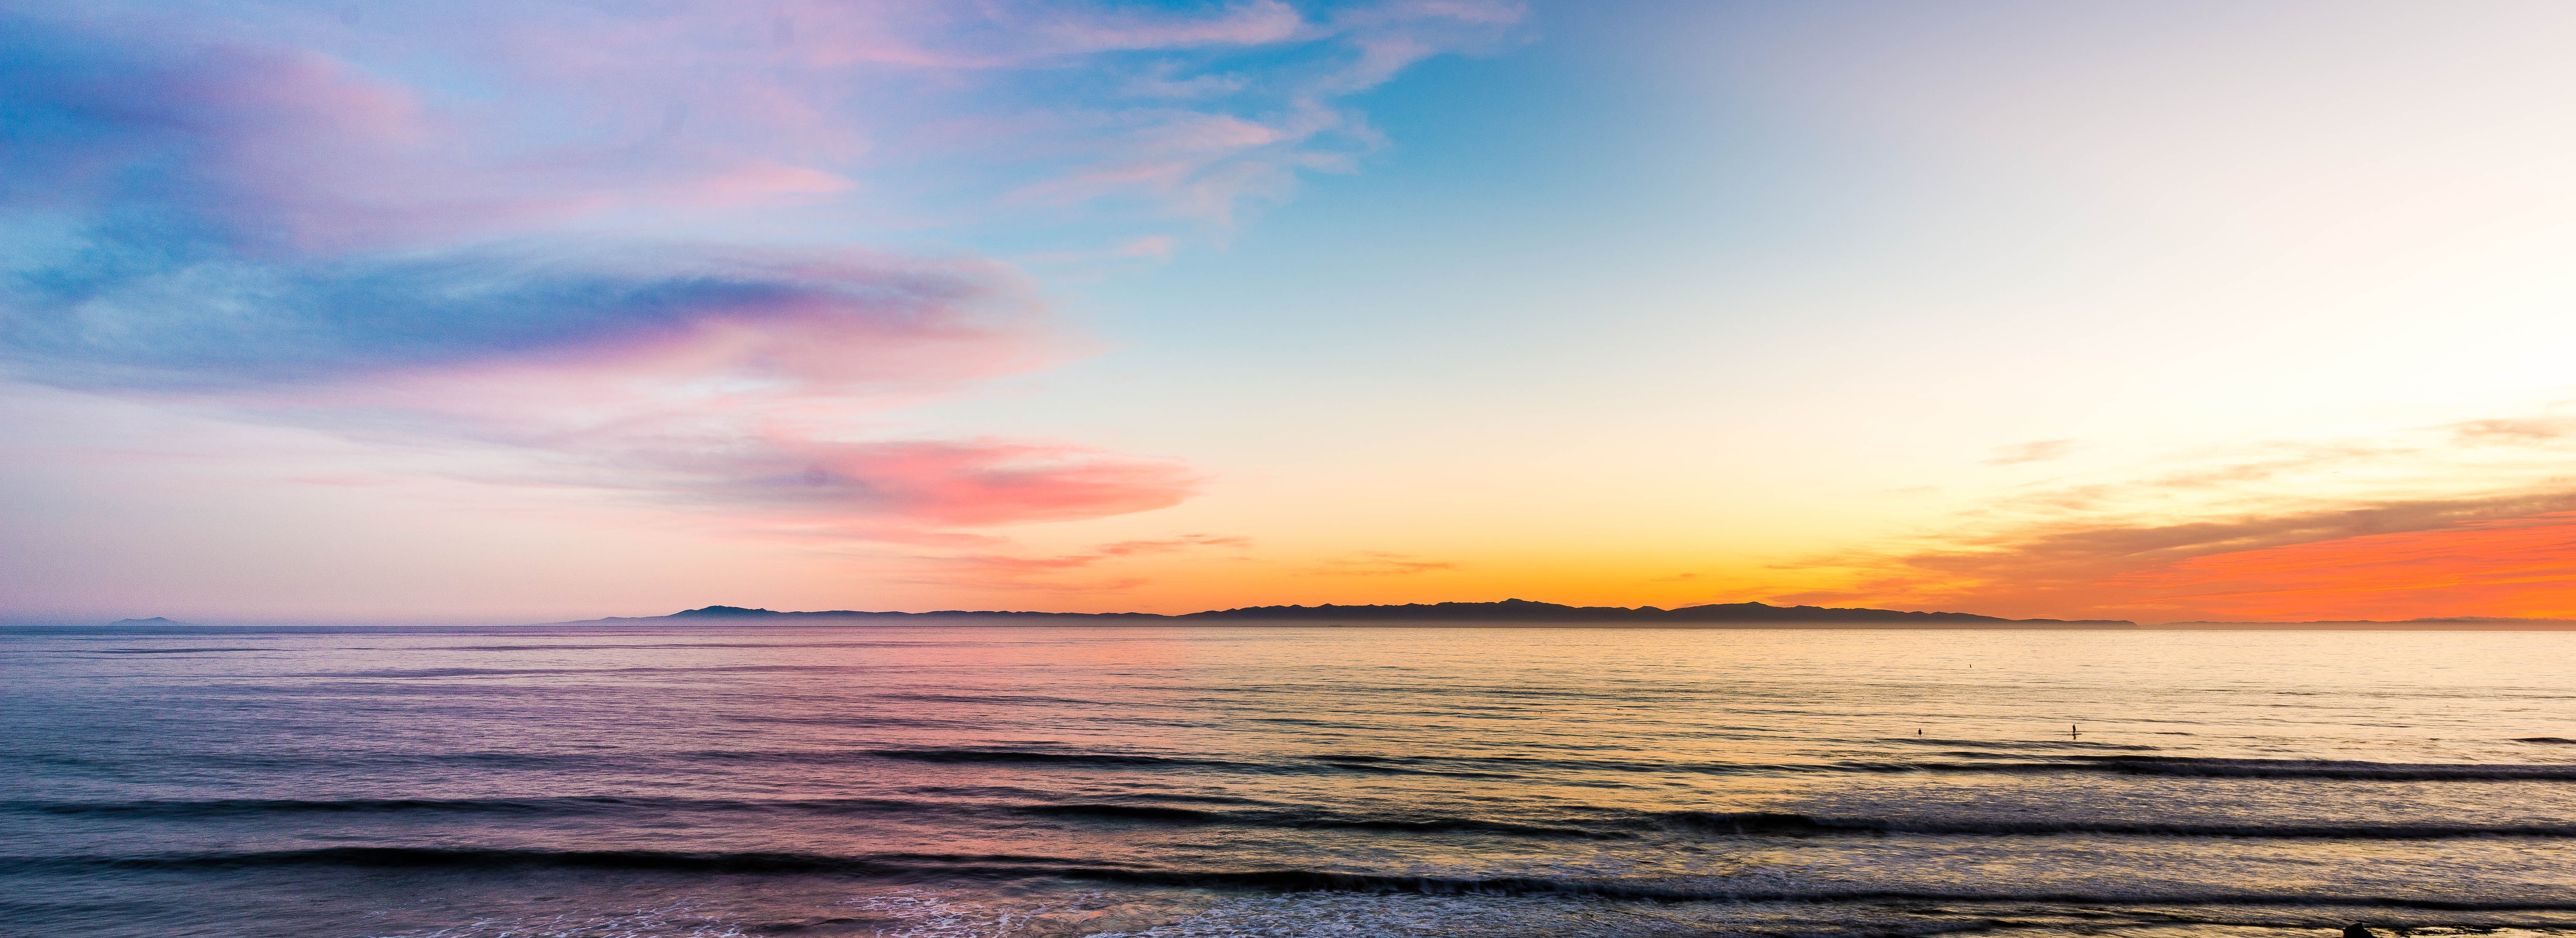 Santa Barbara Channel sunset